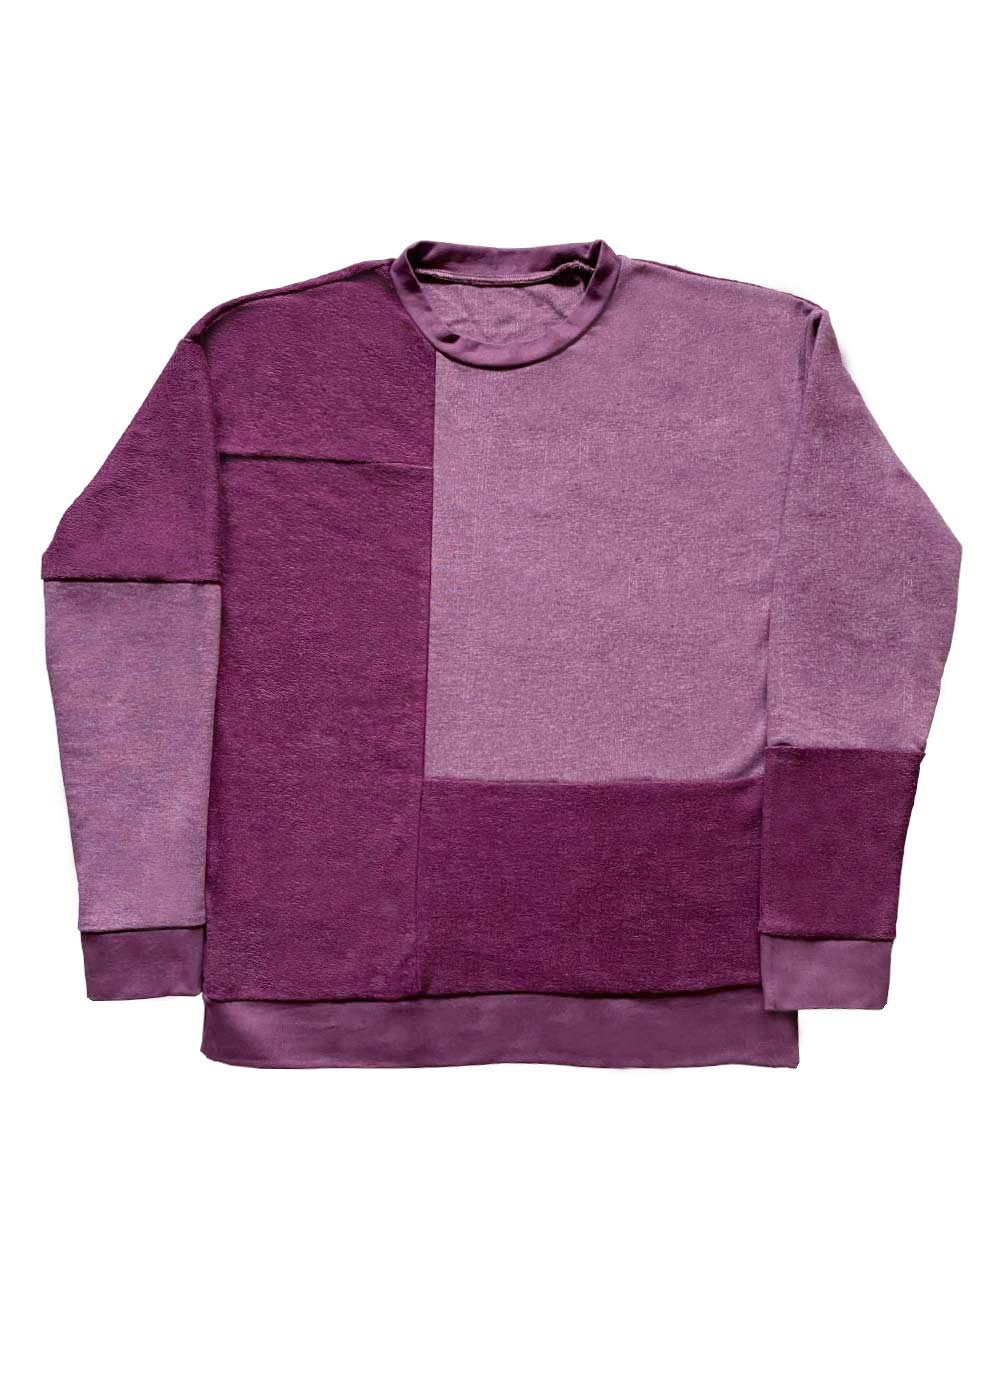 In & out Reversible Oversize Sweatshirt